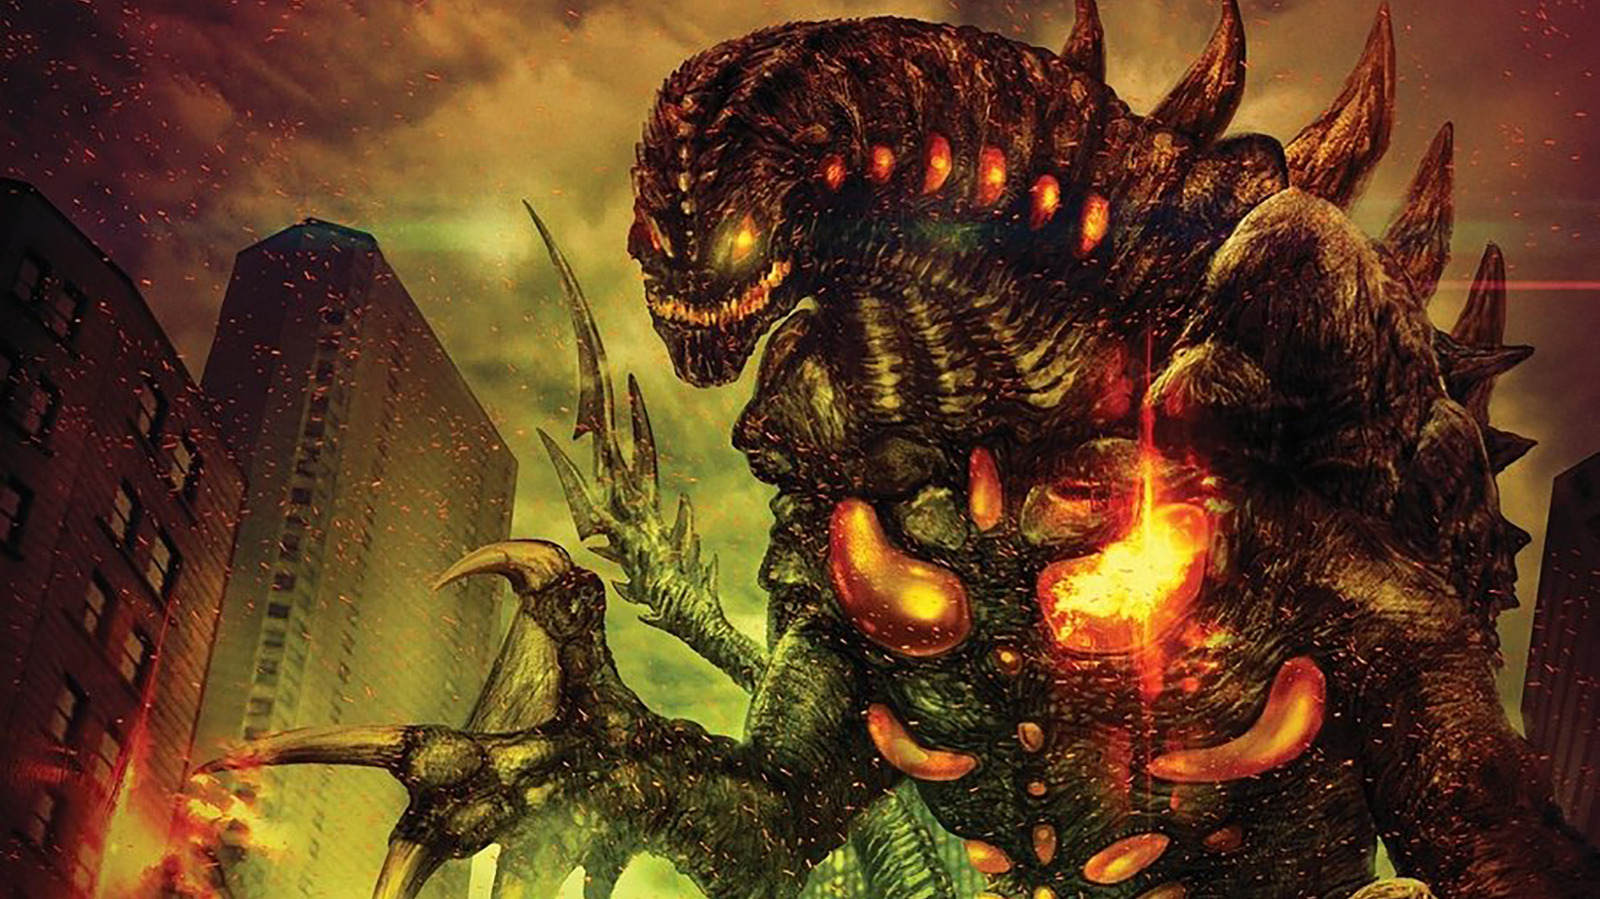 #John Wick Director Chad Stahelski To Direct Kaiju TV Show Project Nemesis